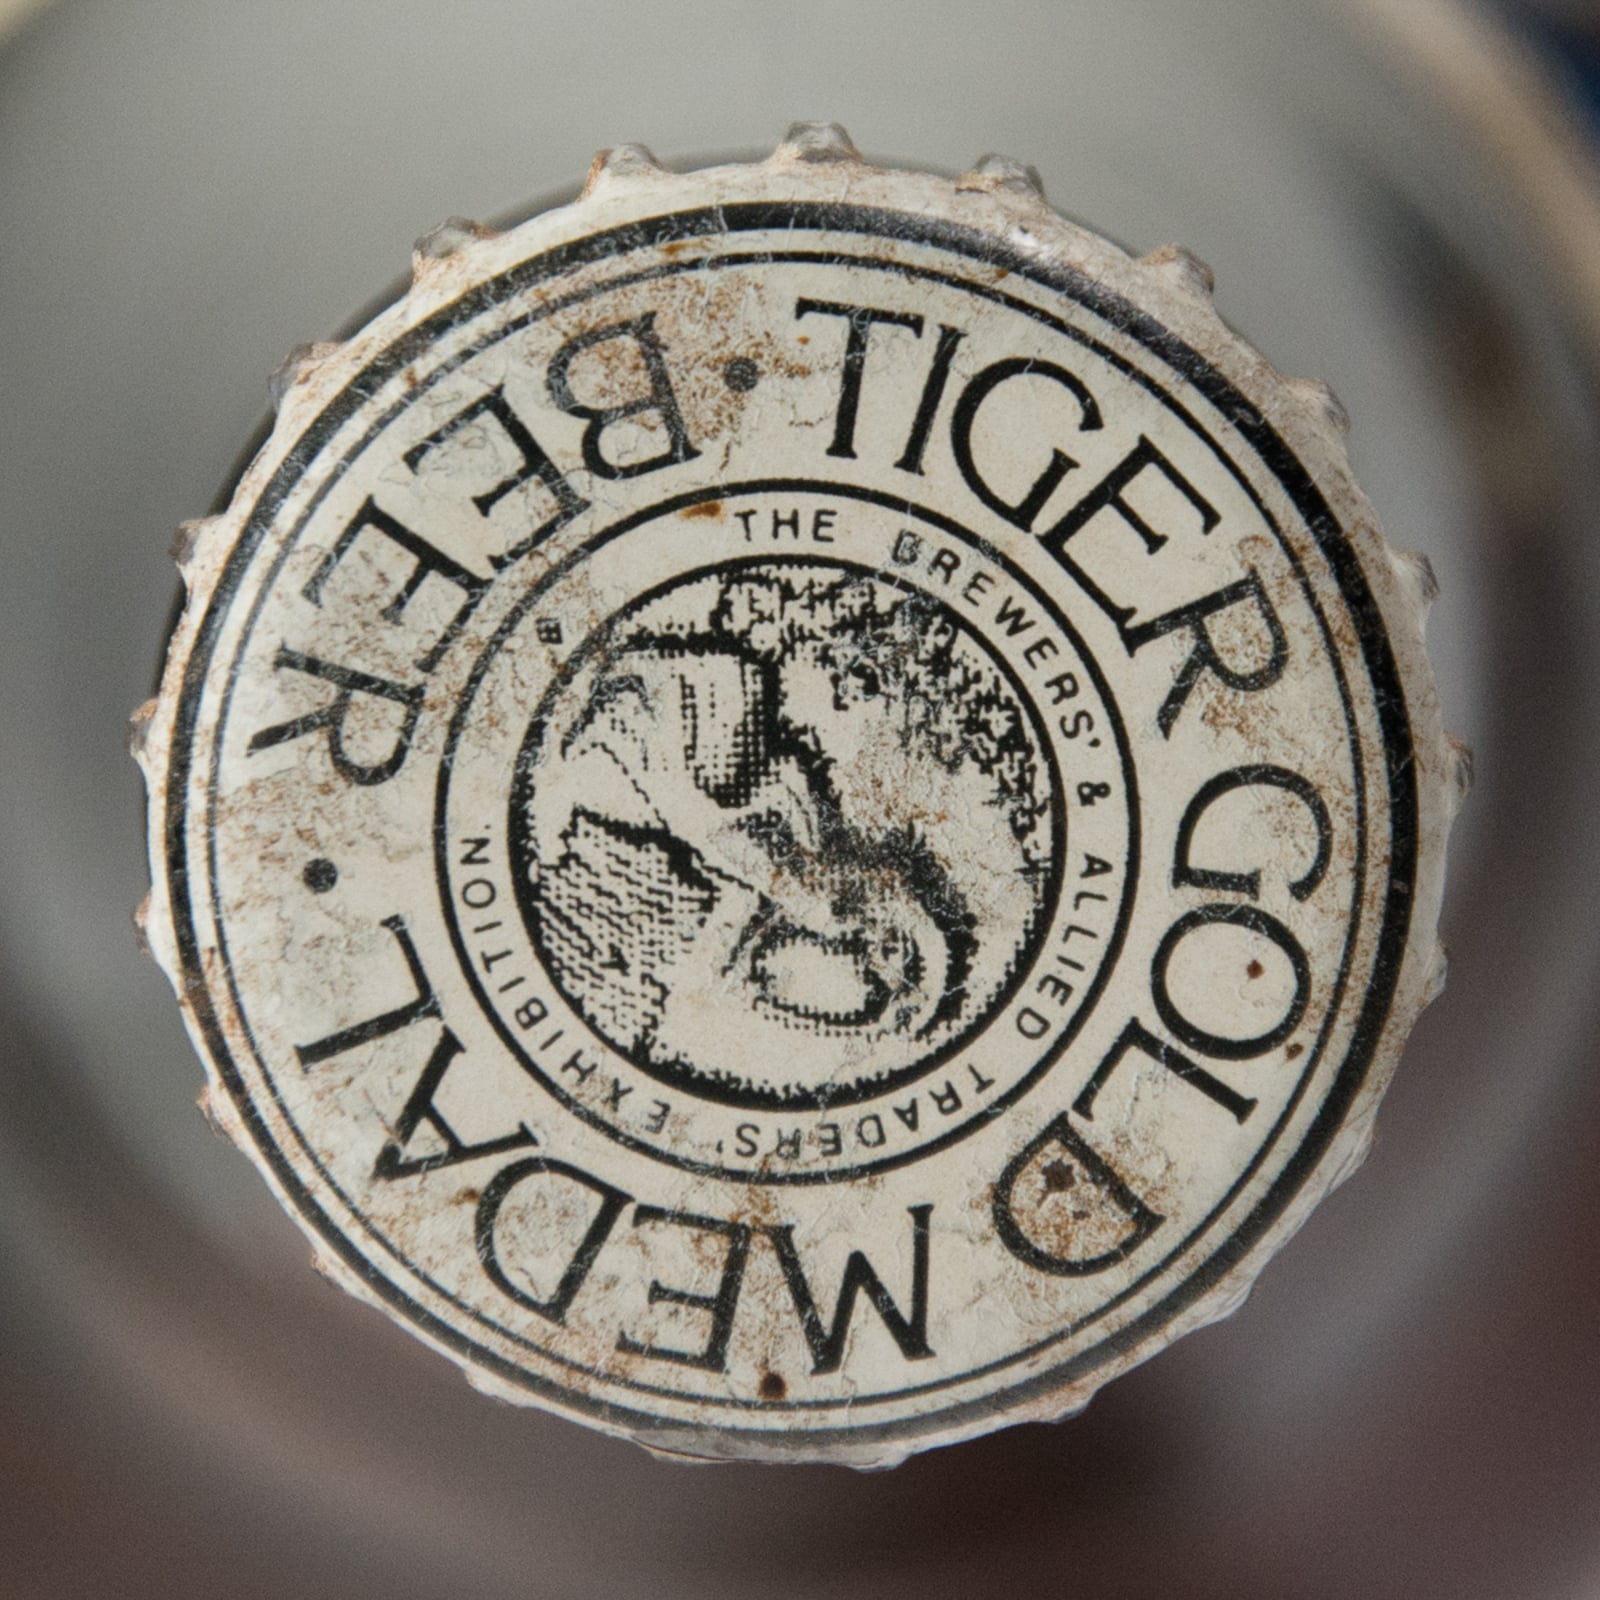 Tiger Gold Medal Lager Beer "Choice Of The World's Master Brewers" Vintage Bottle